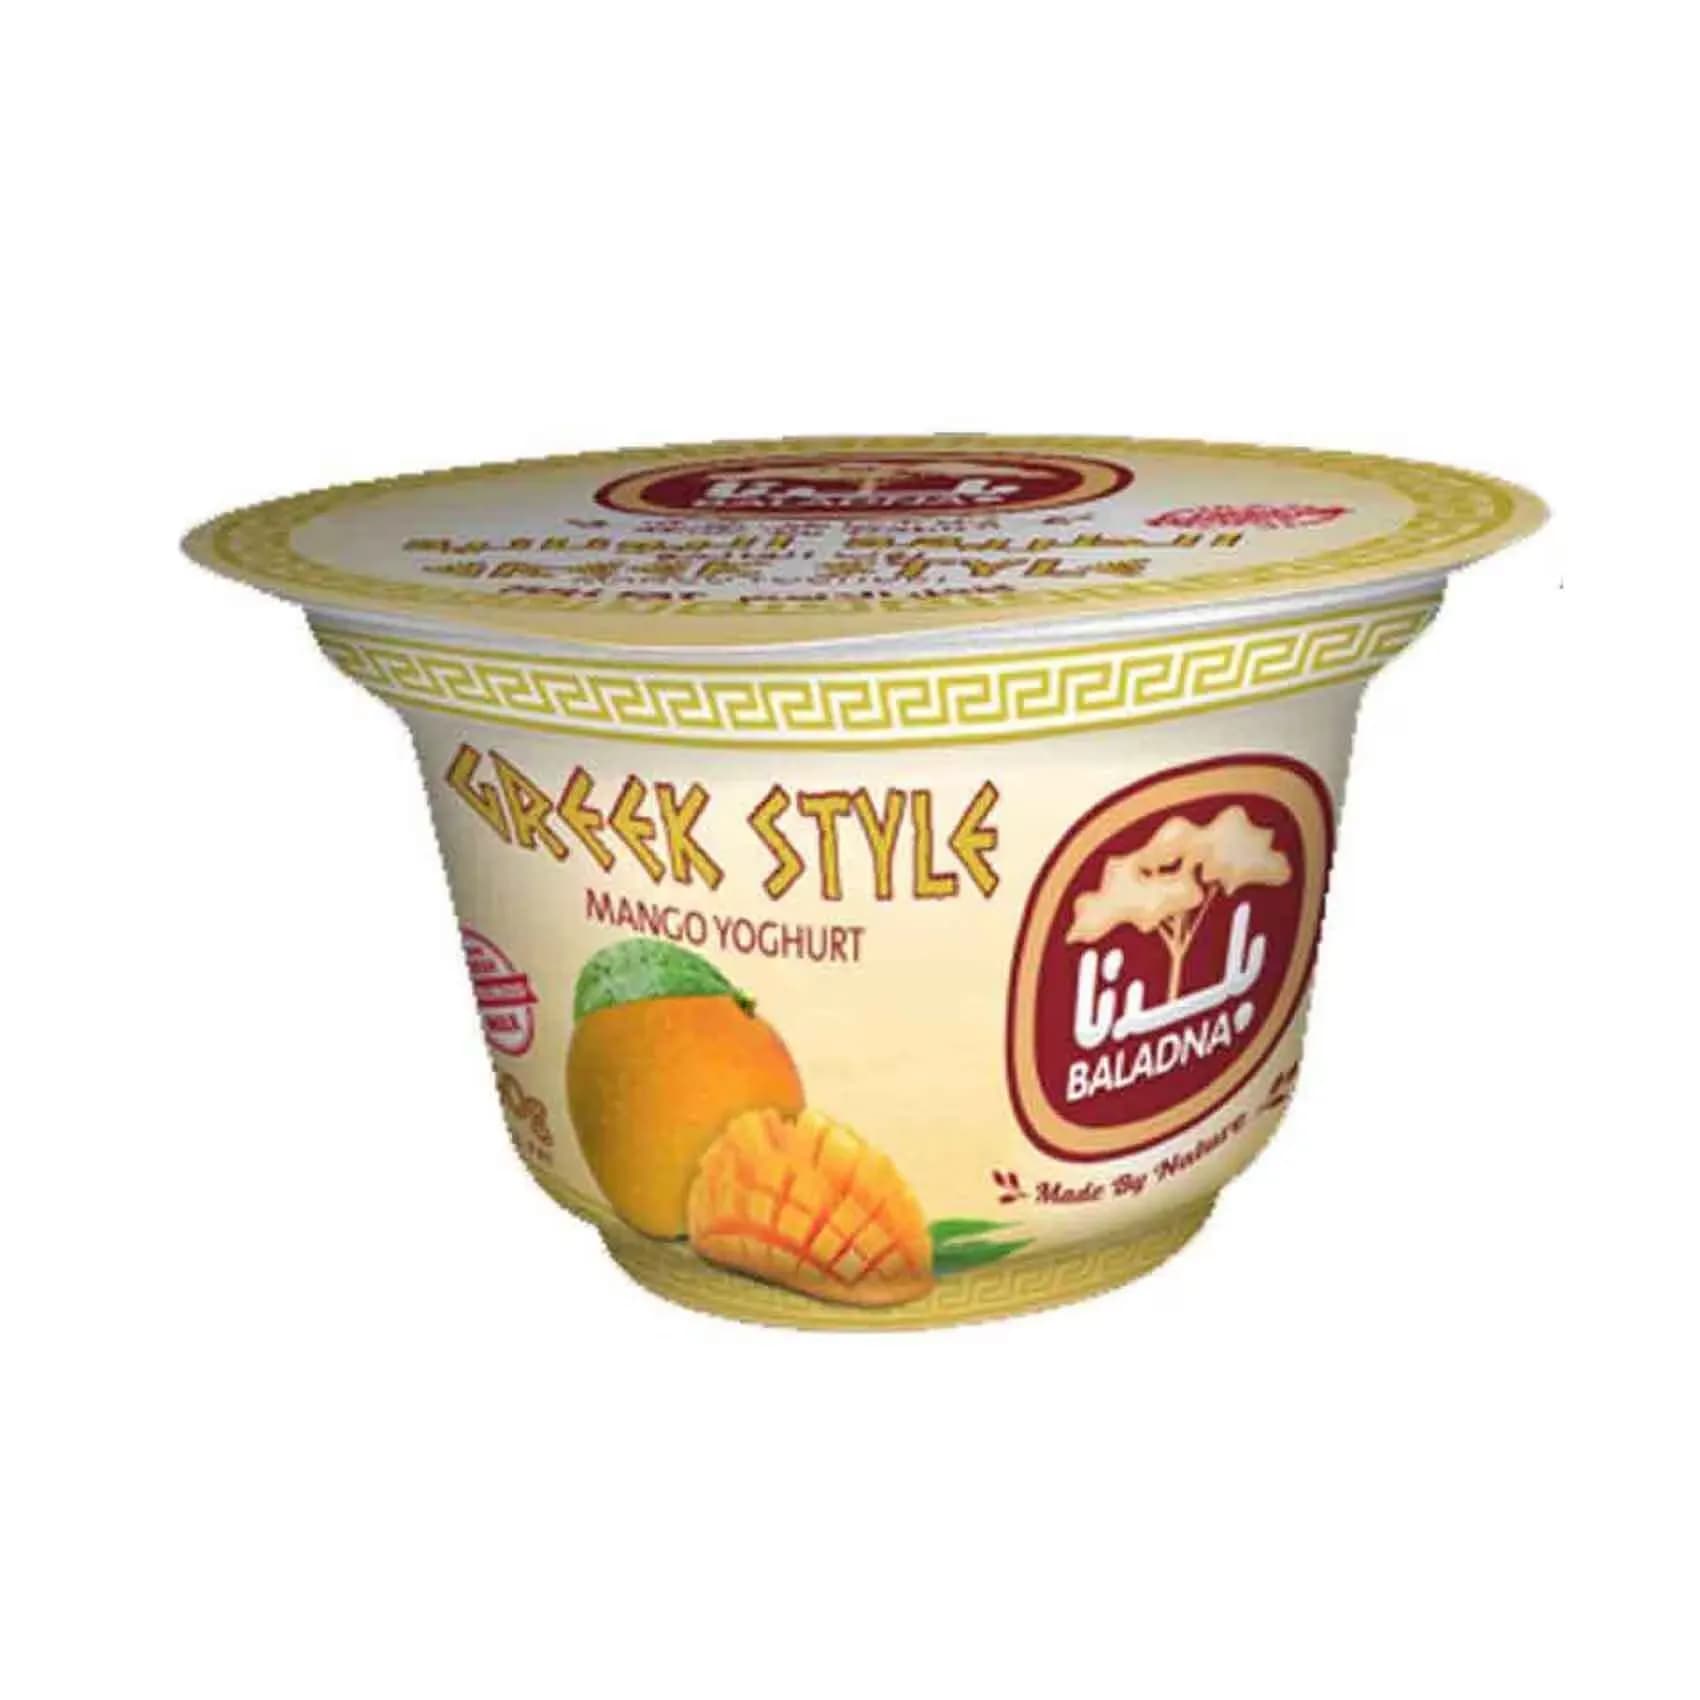 Baladna Greek Style Mango Yogurt 150G